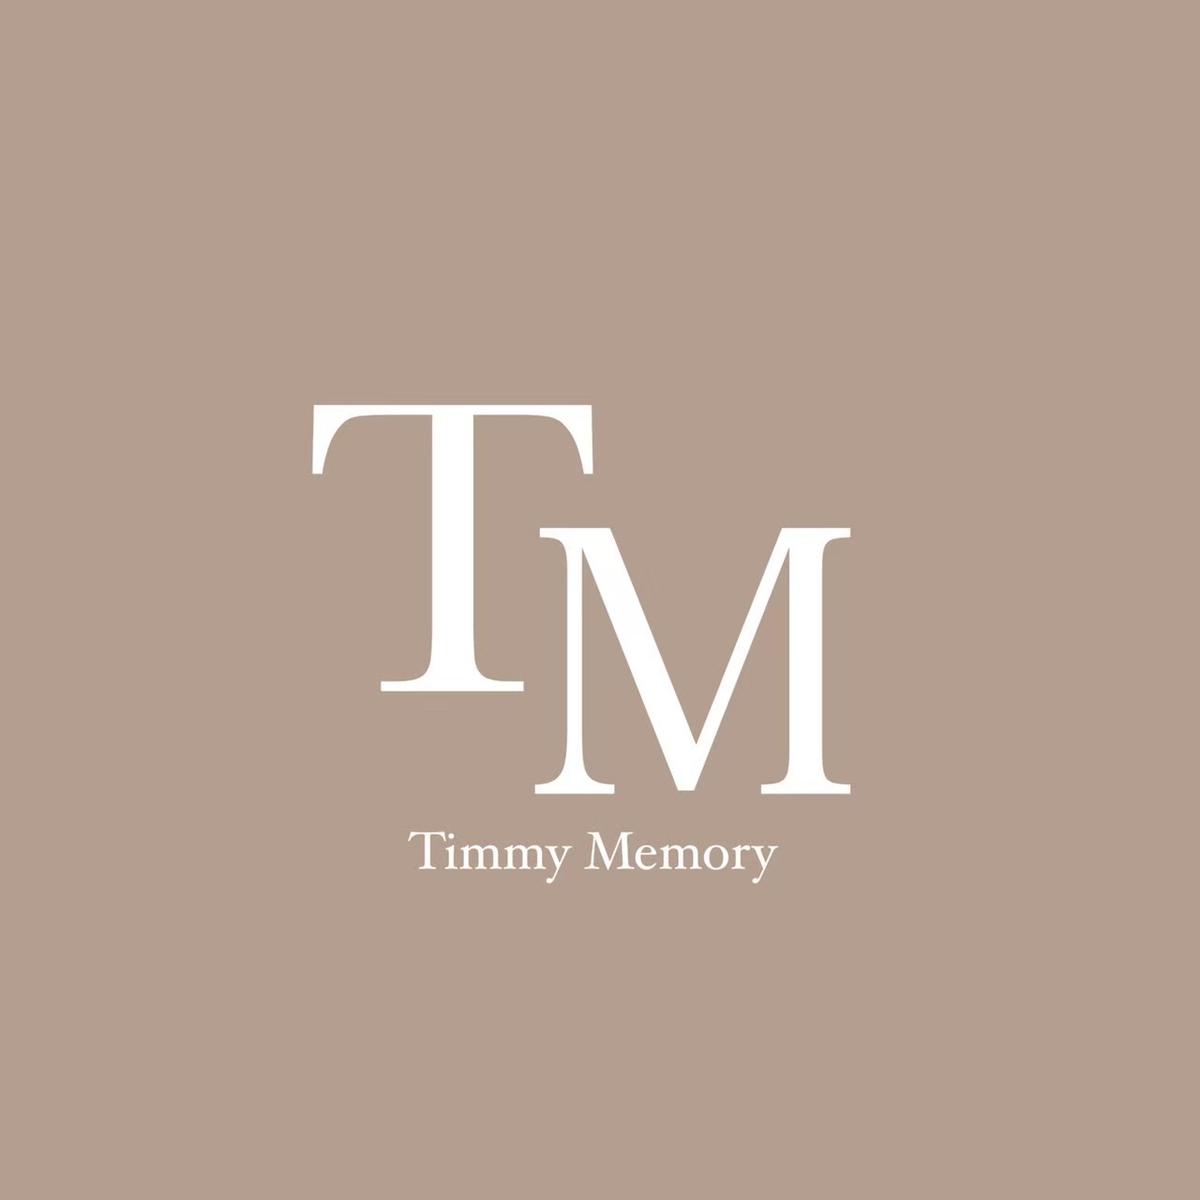 Timmy Memory